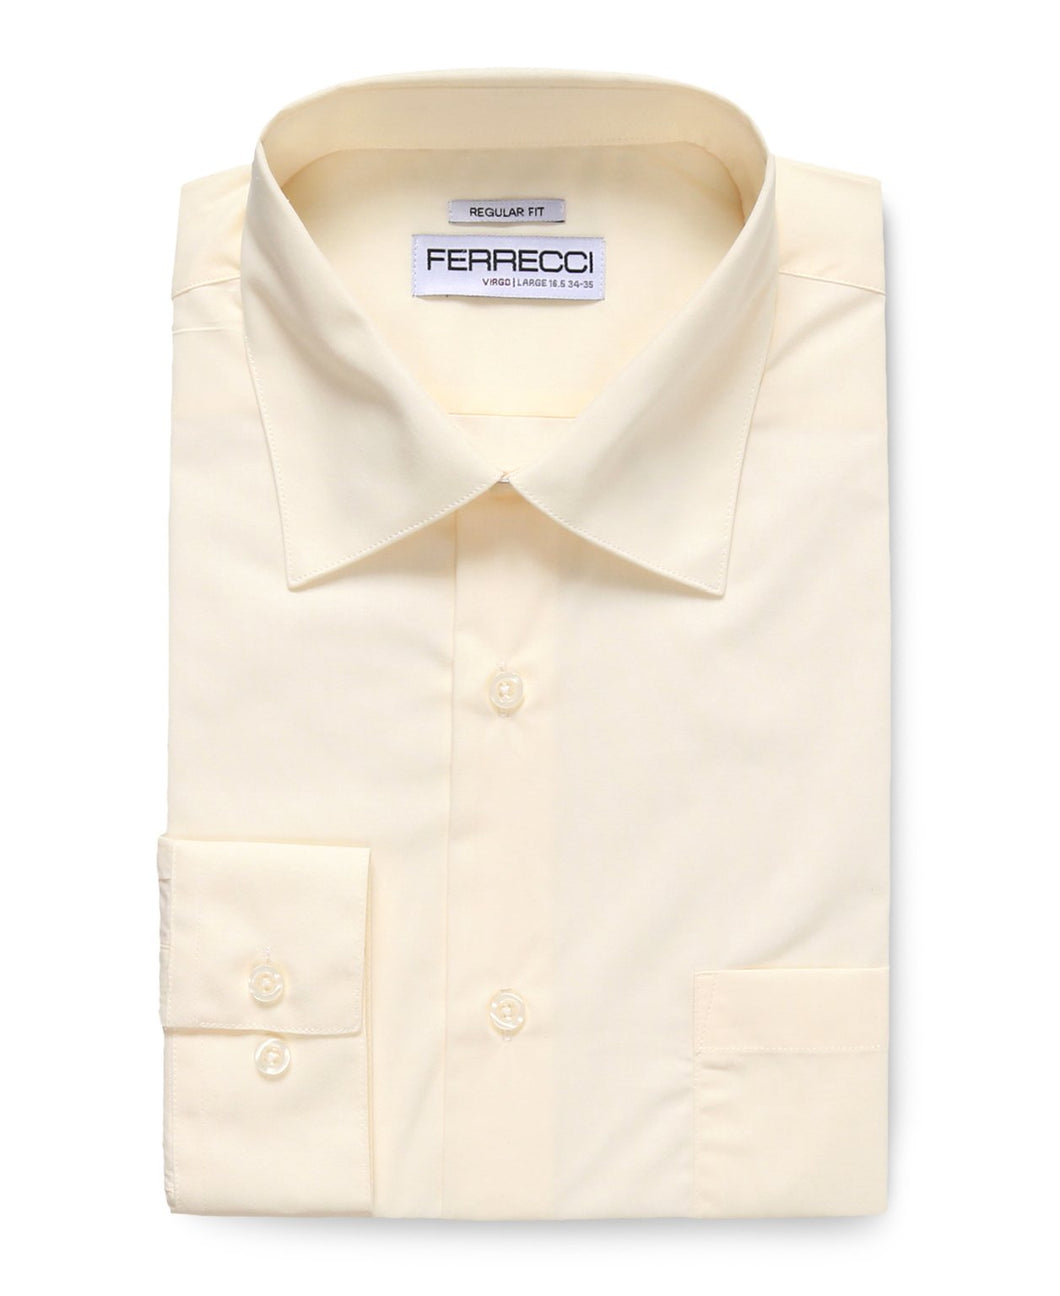 Virgo Off White Regular Fit Shirt - Ferrecci USA 